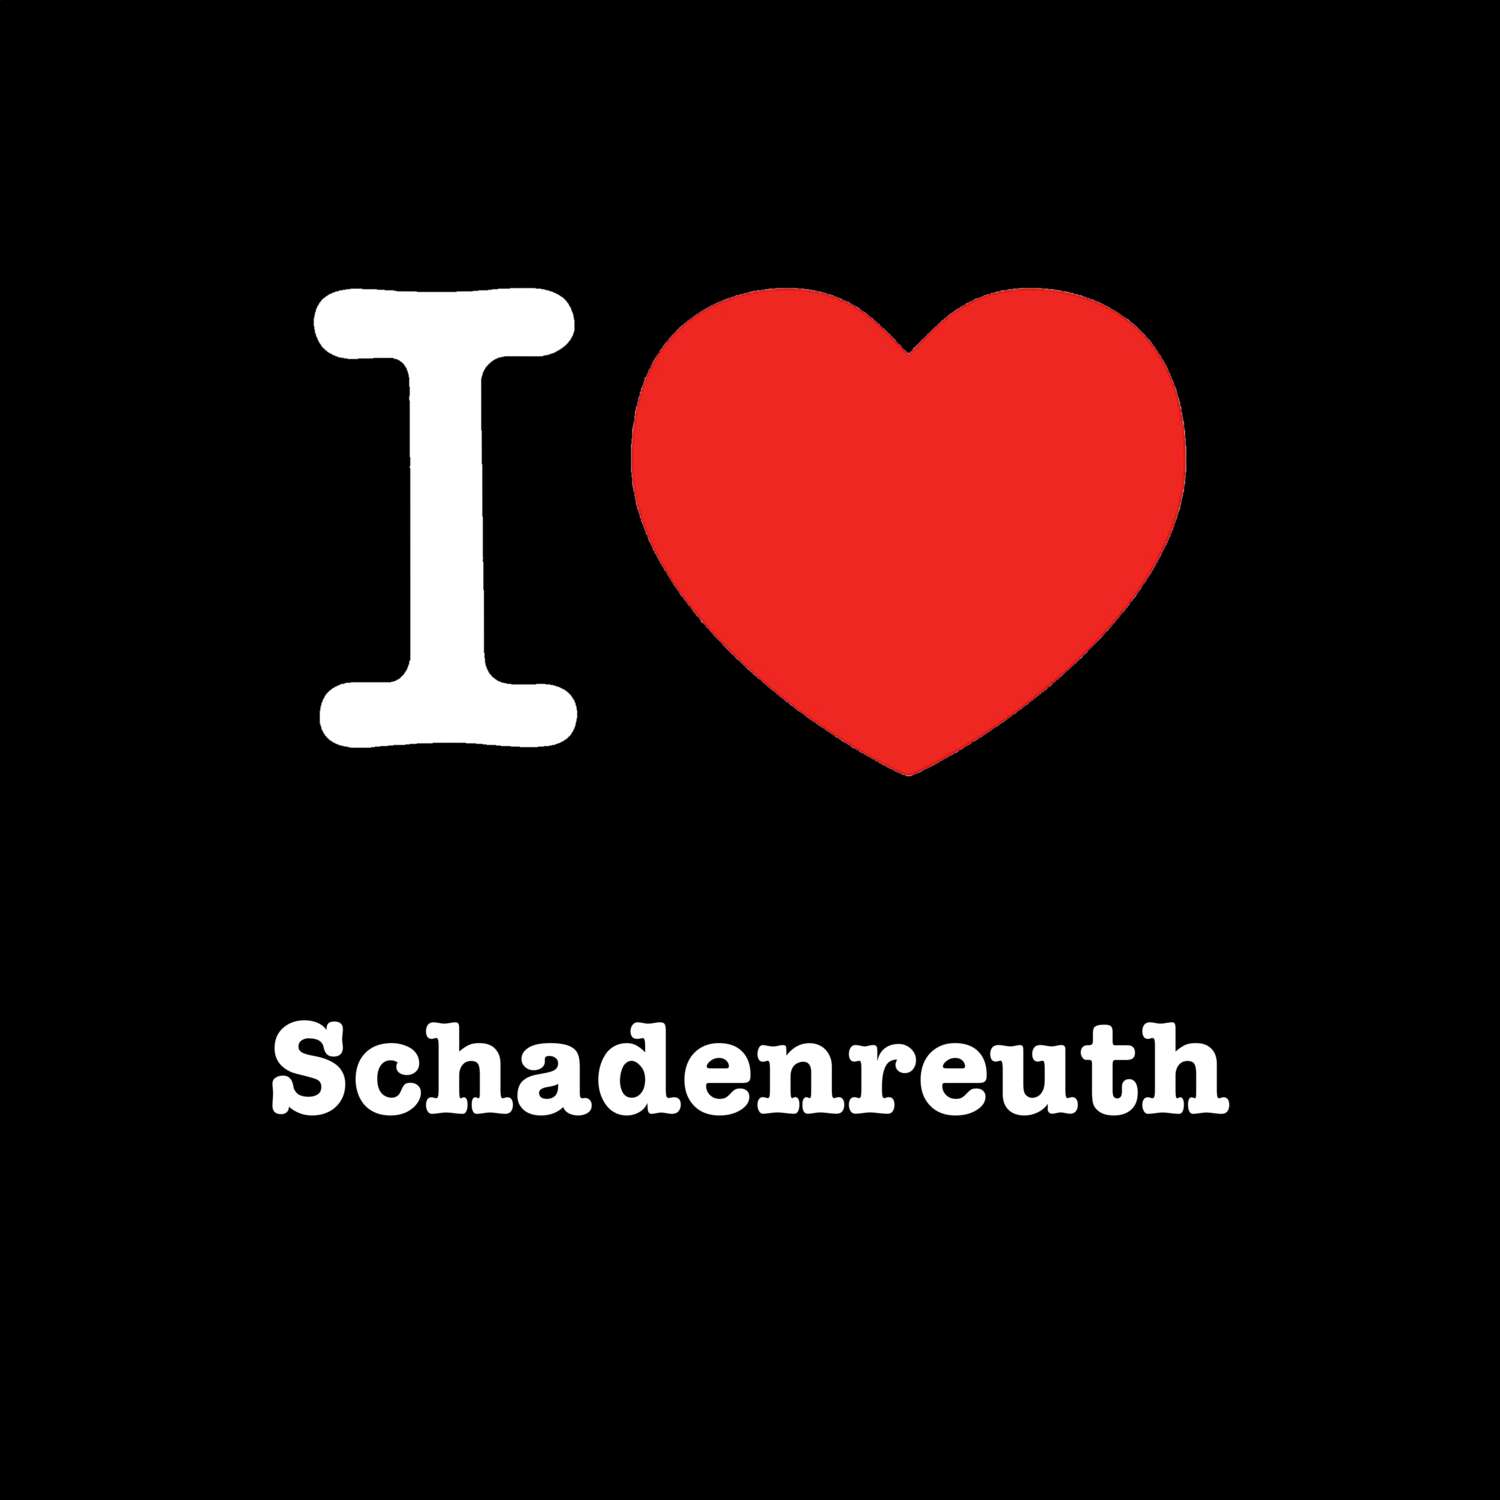 Schadenreuth T-Shirt »I love«